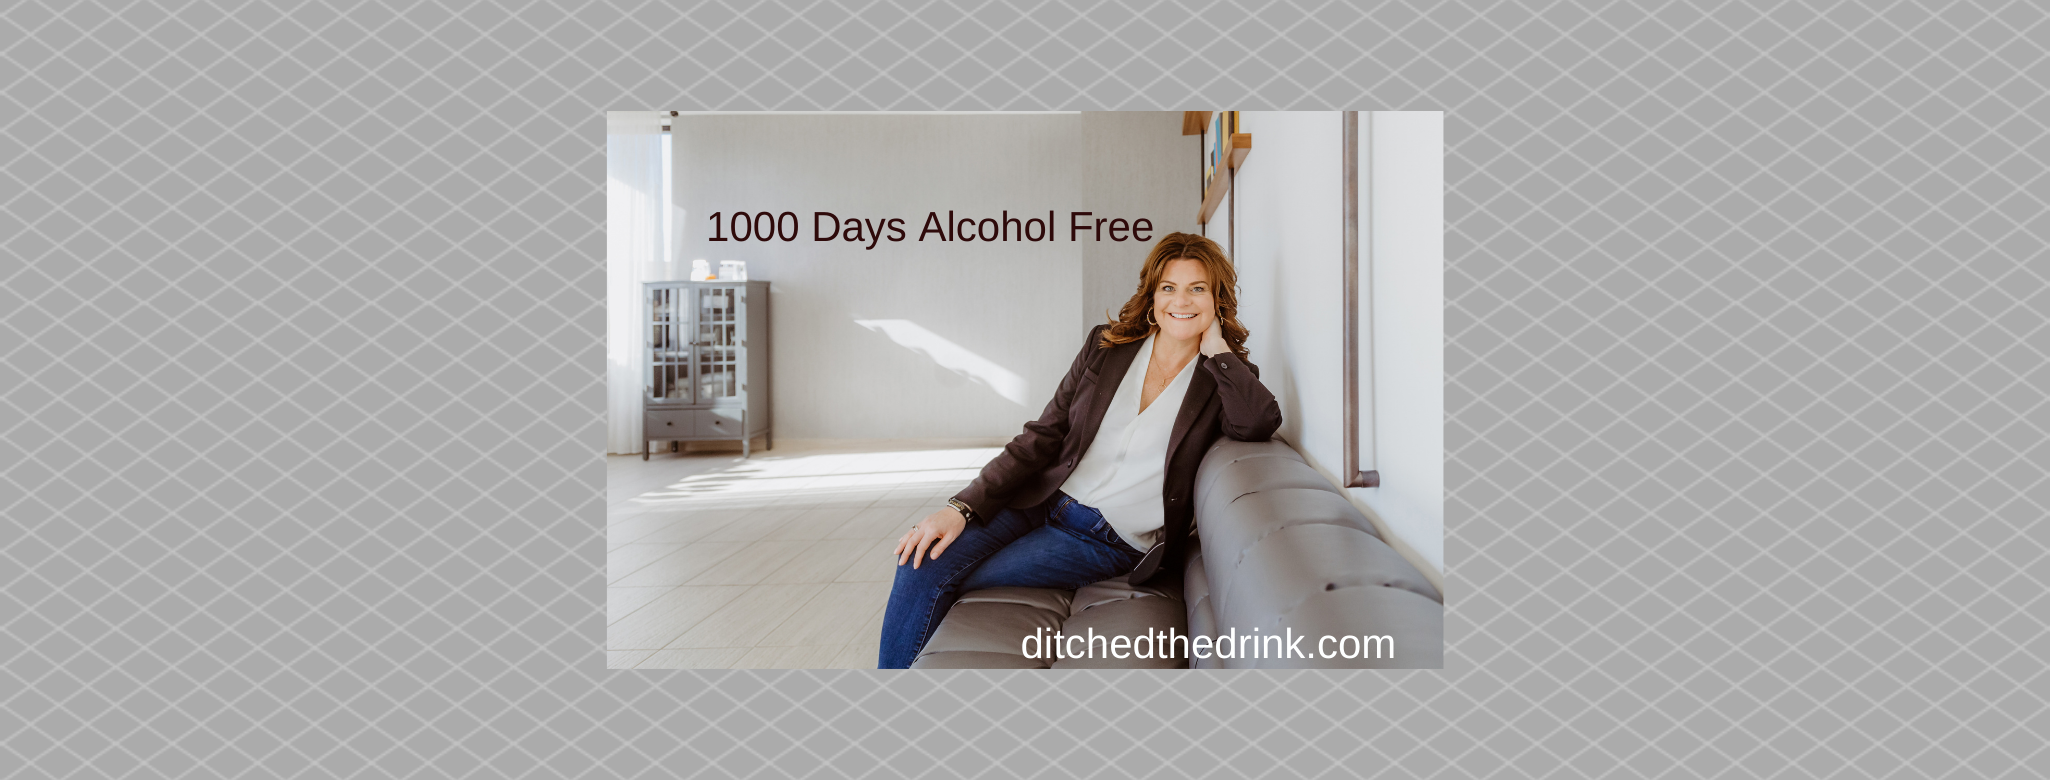 1000 Days Alcohol Free